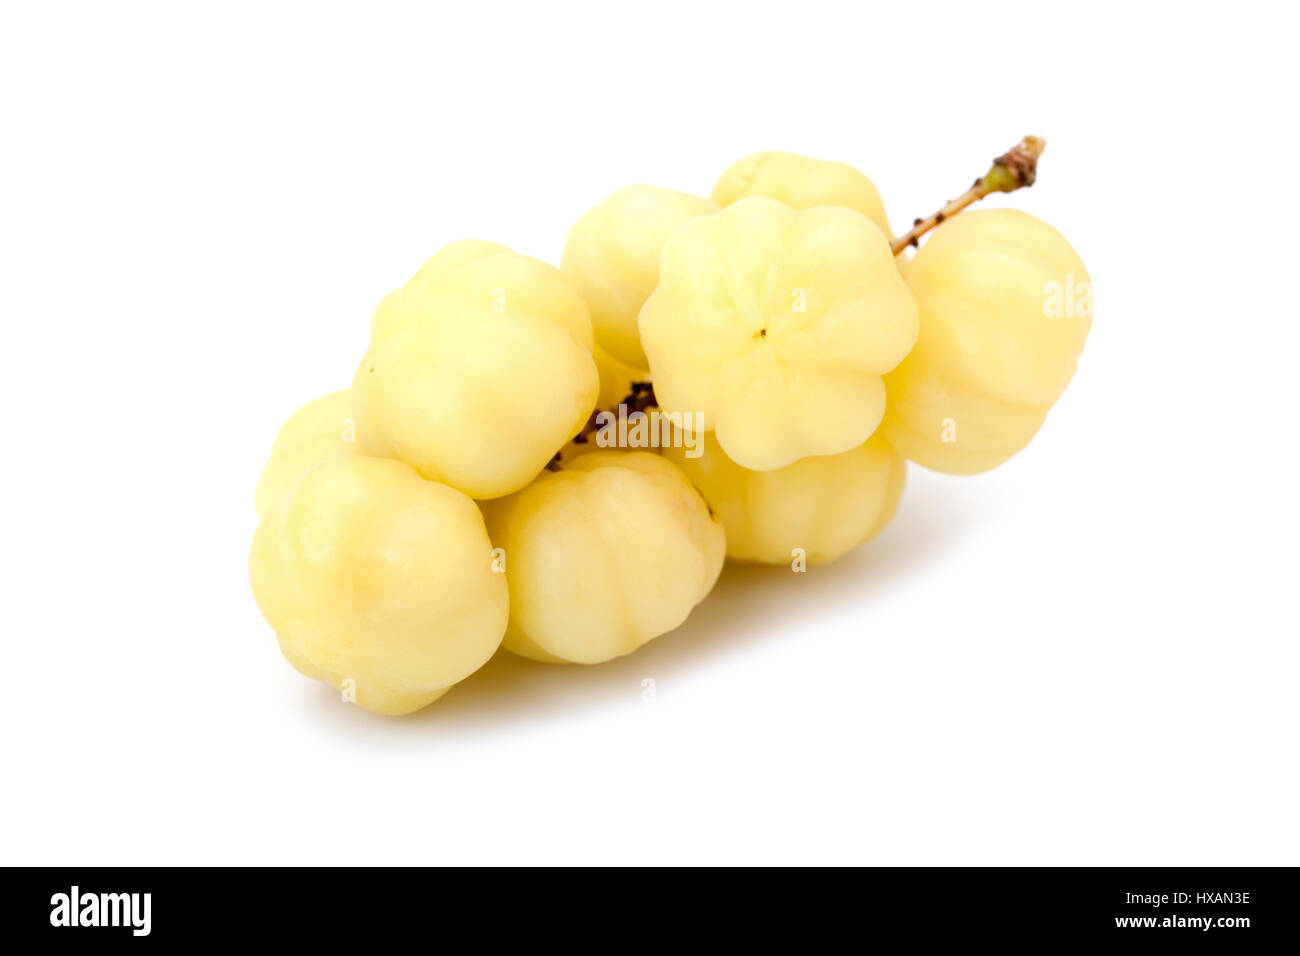 Phyllanthus acidus or star gooseberry isolated on white background Stock Photo